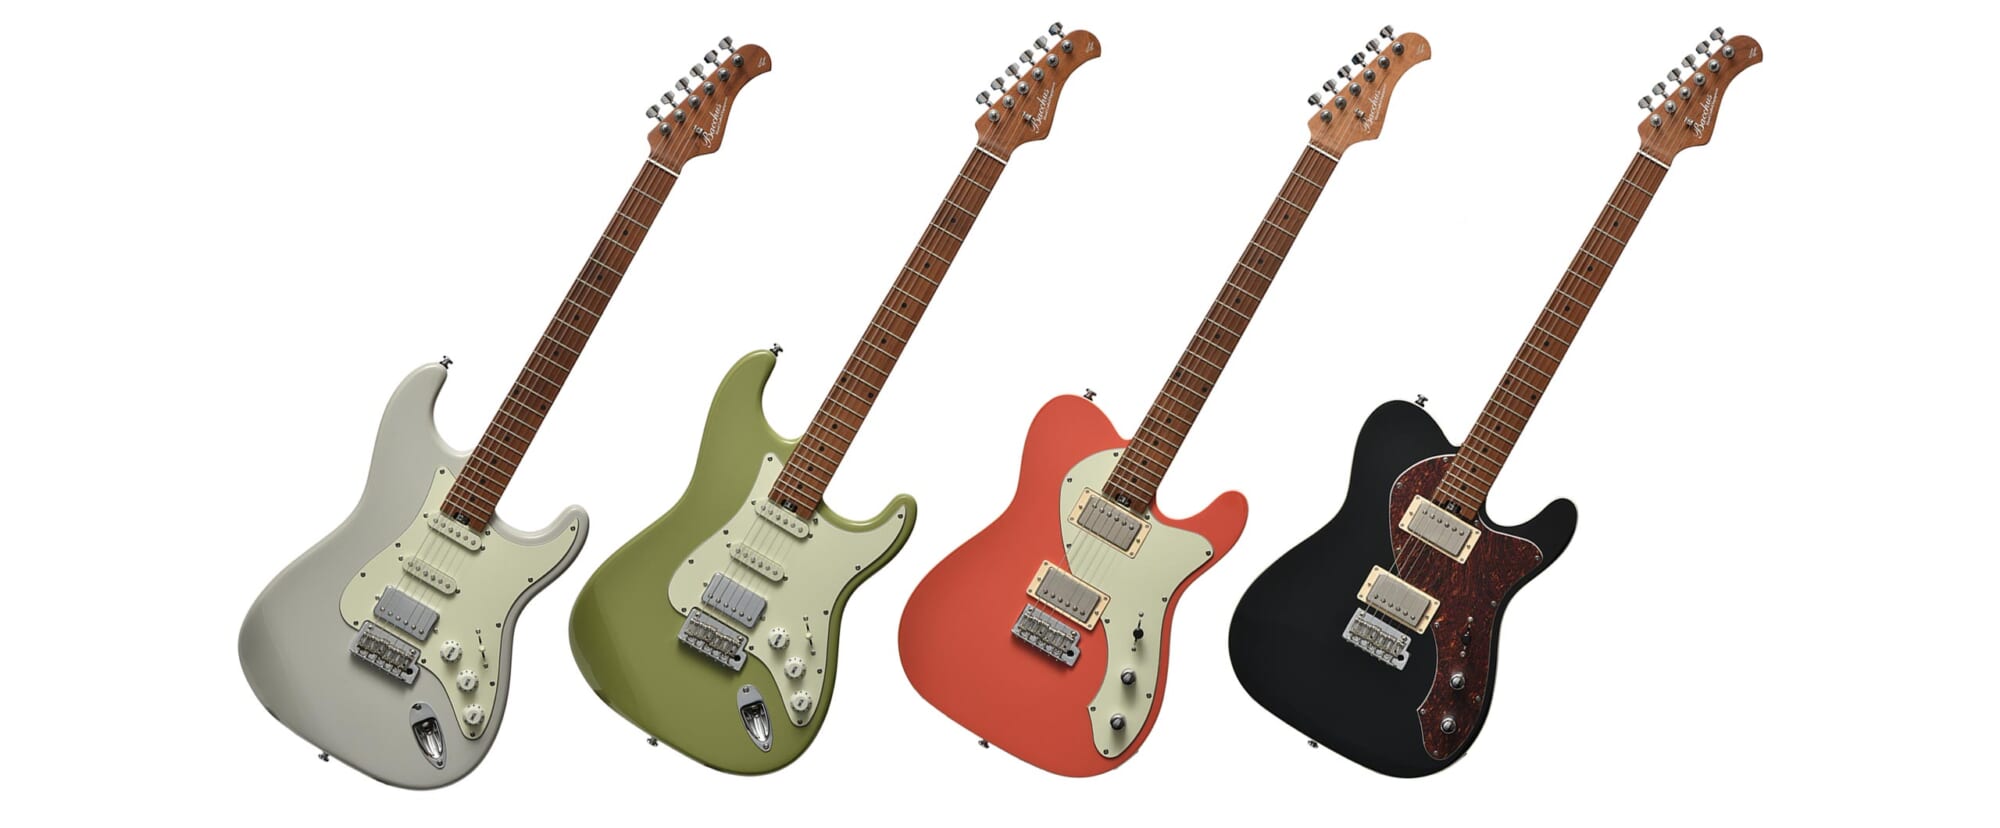 Bacchusより、25インチ・スケールとローステッド・メイプル・ネックを採用したギター2機種が登場